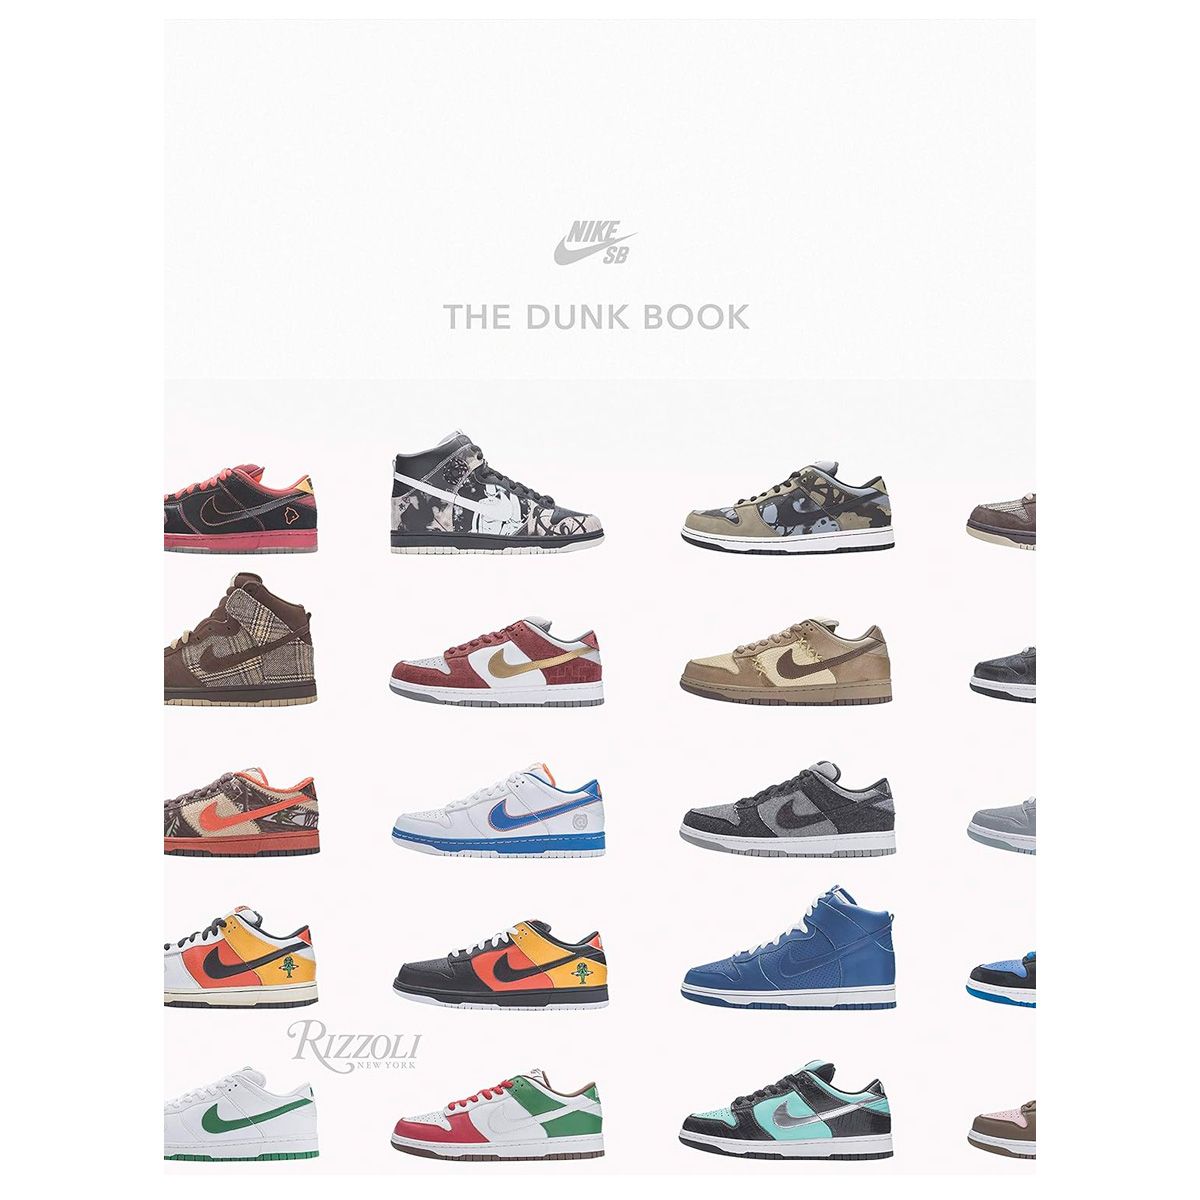 Livre Nike Sb The Dunk Book